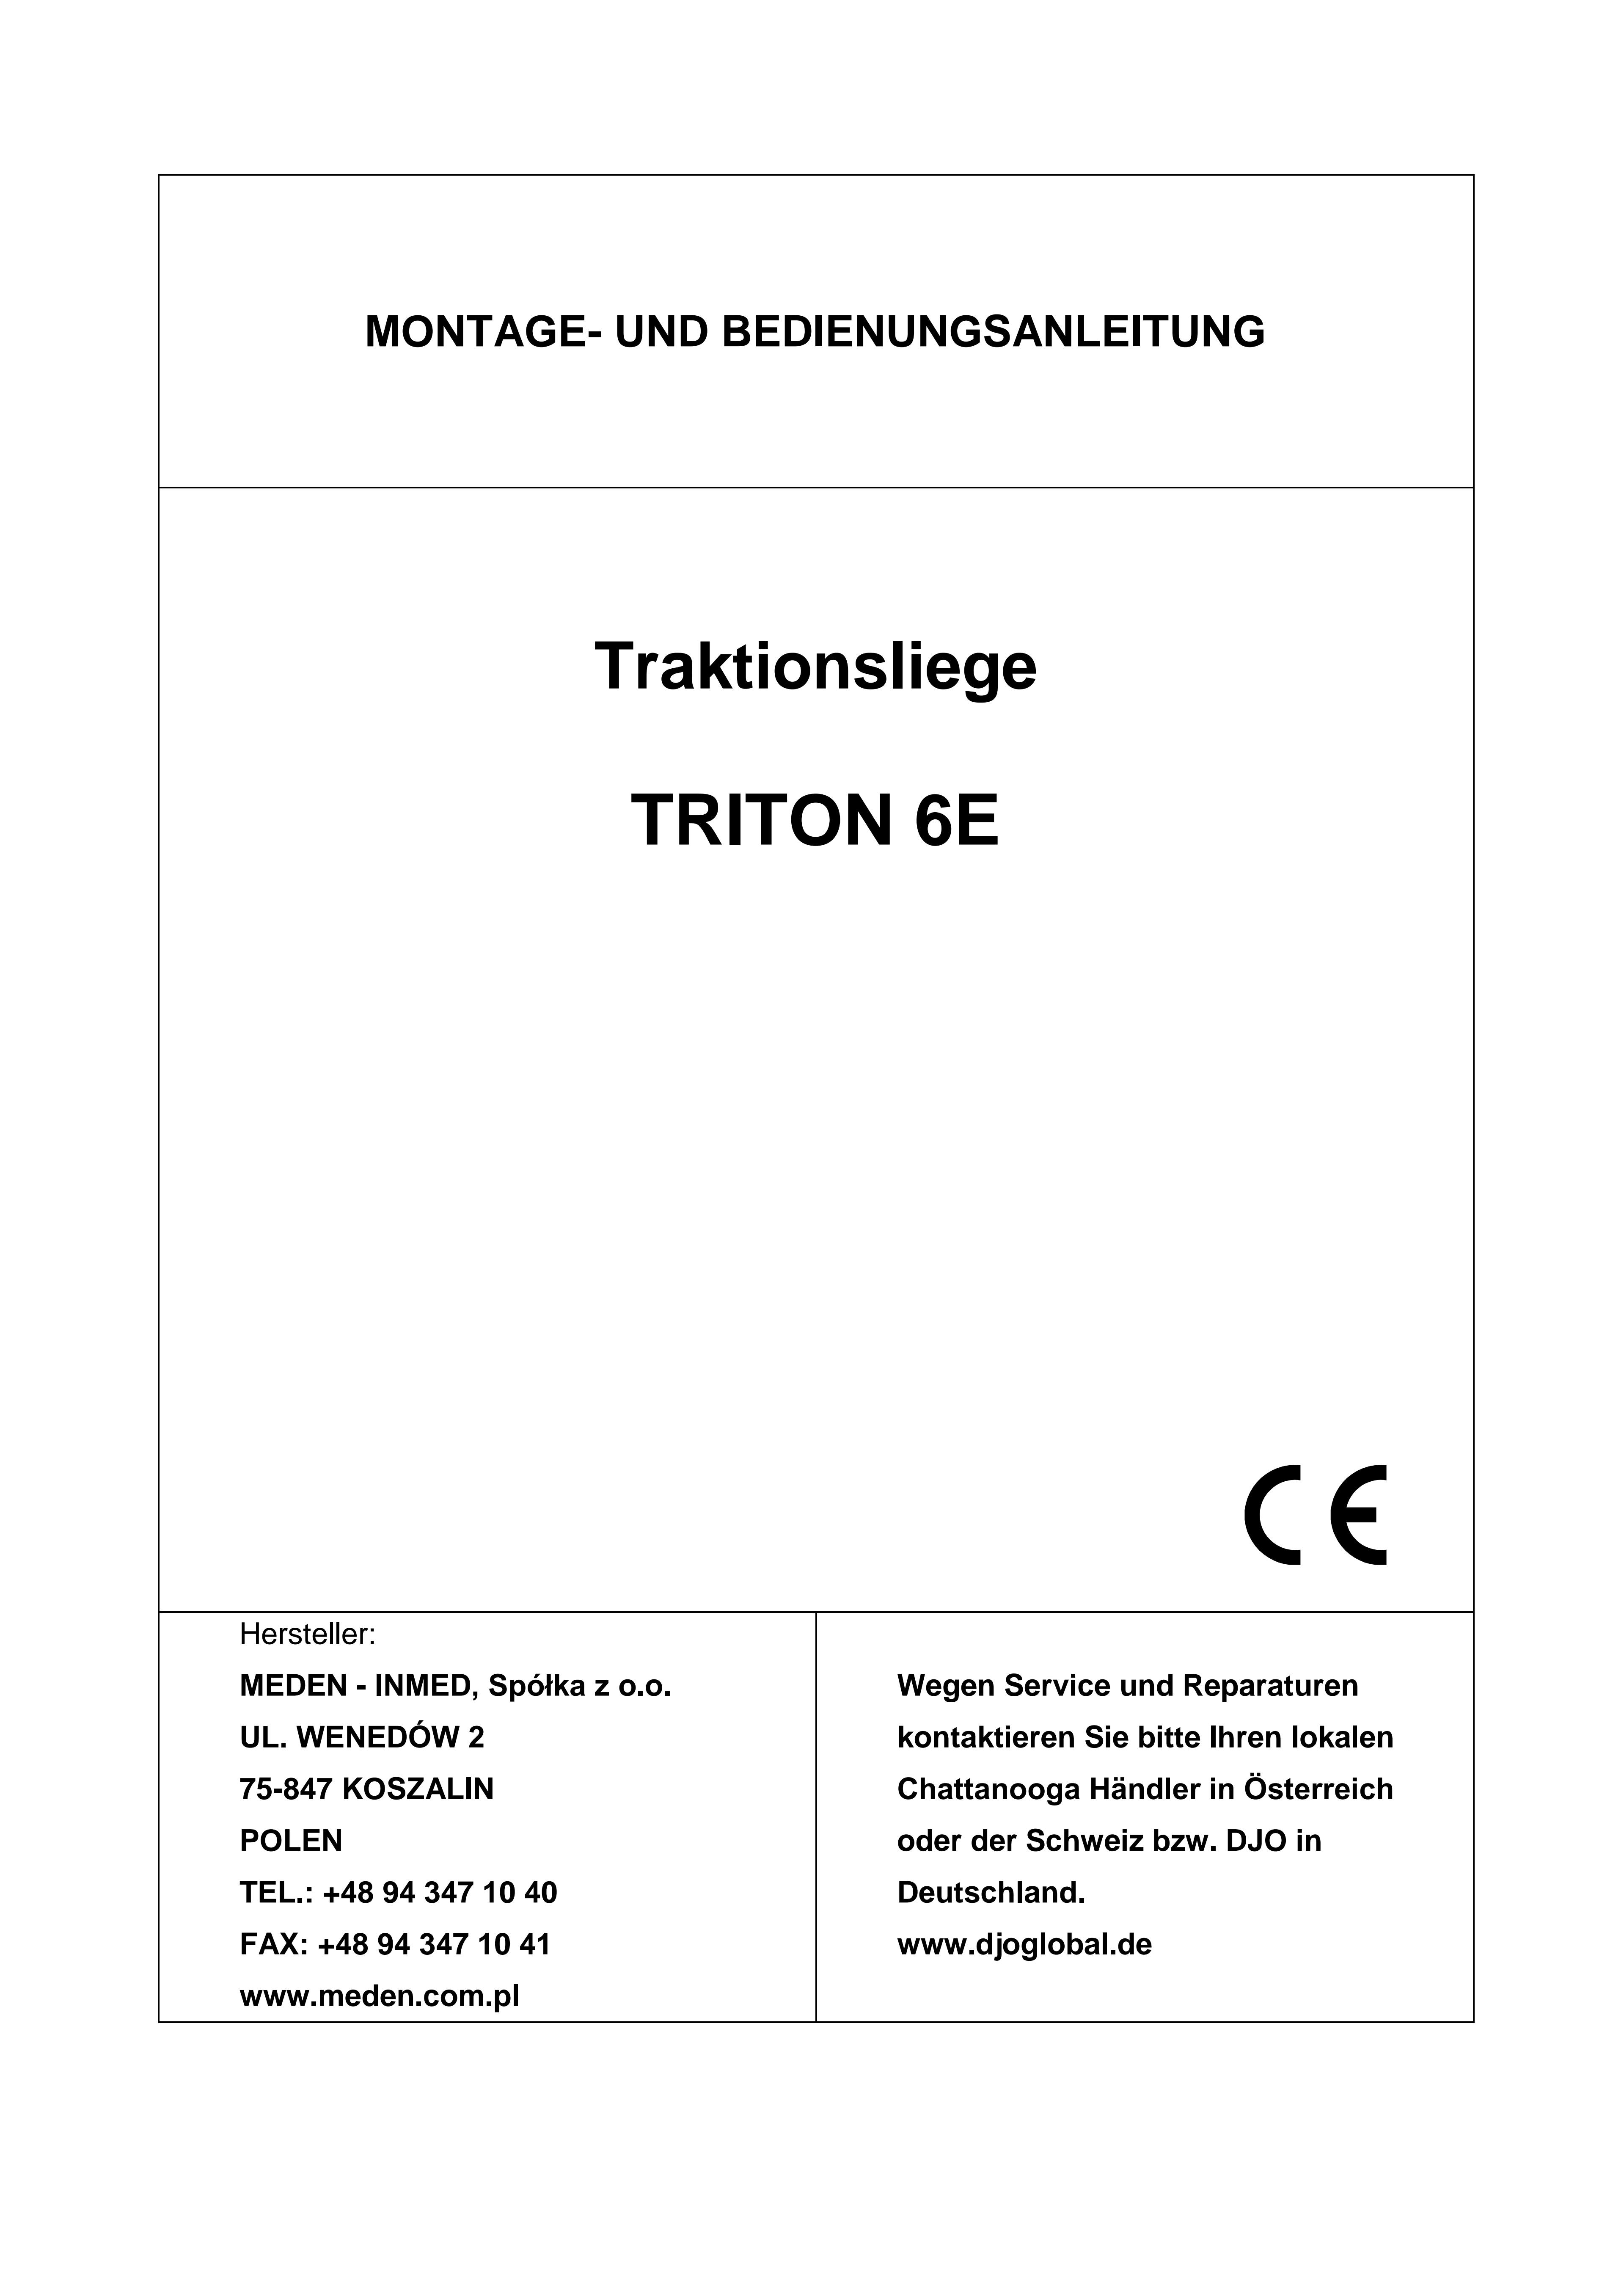 Gebrauchsanleitung_CHATTANOOGA_Triton-6E-Traktionsliege_2018-04-17.pdf